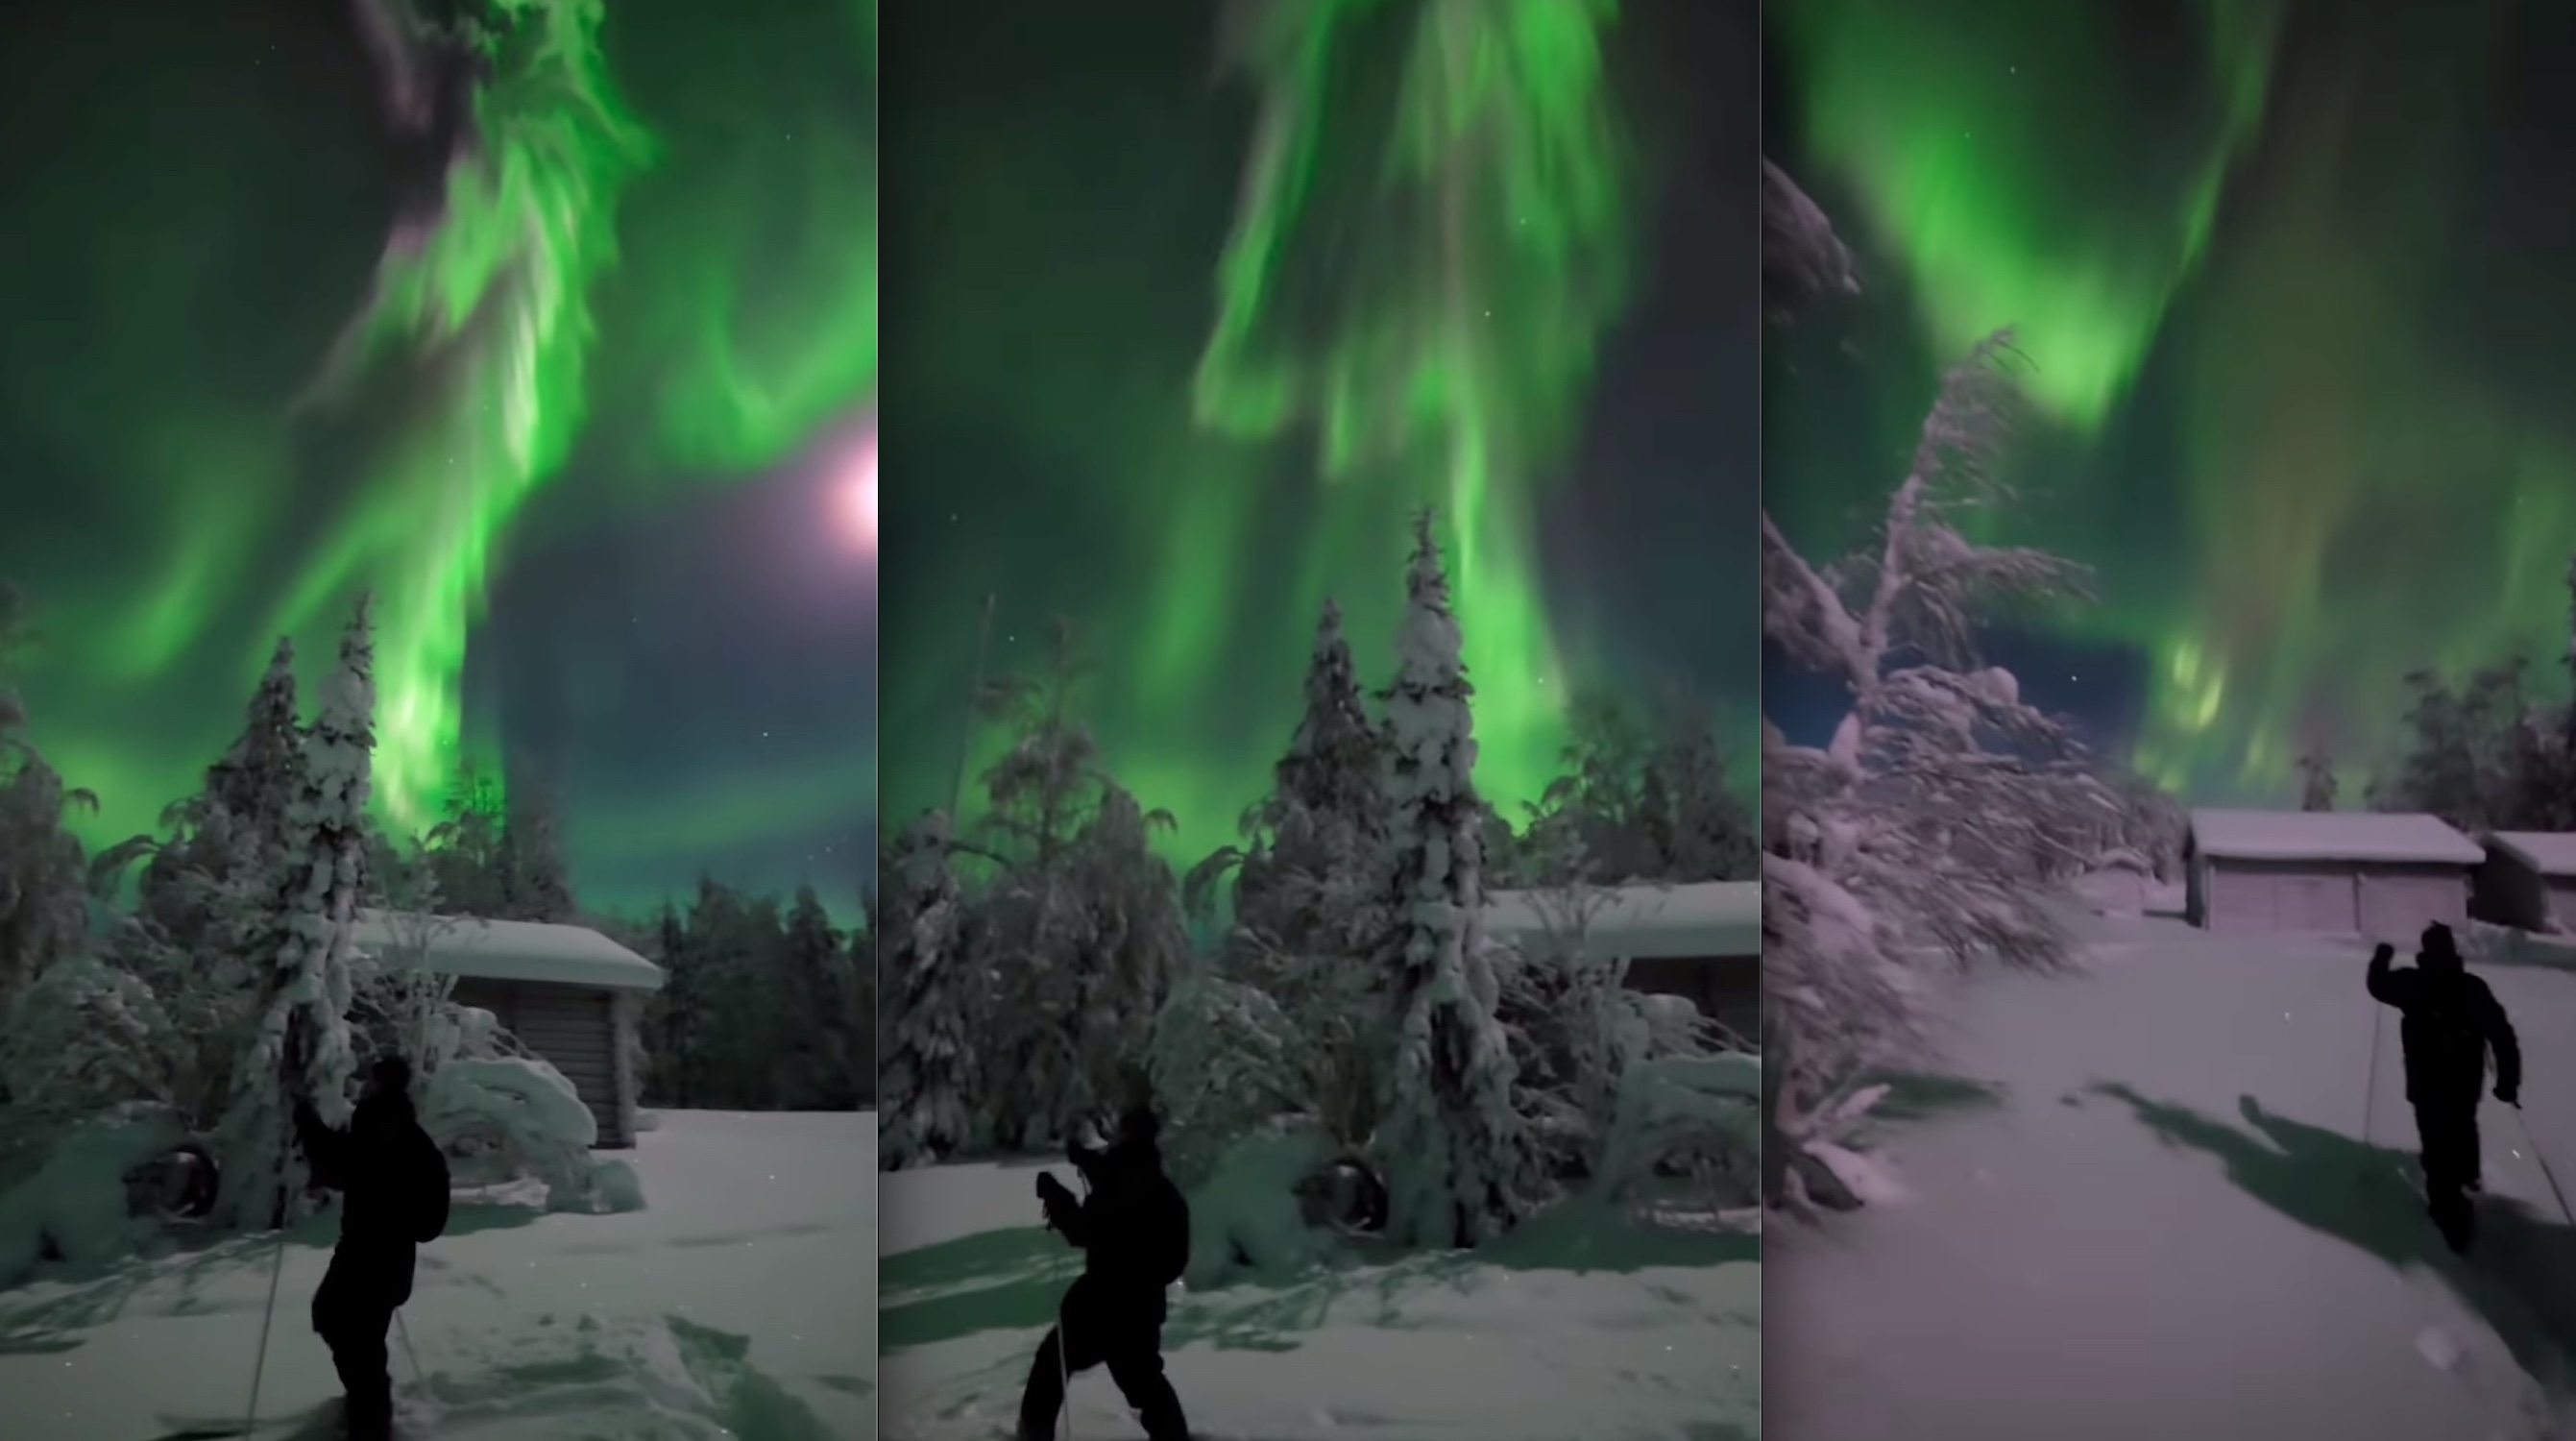 VIDEO: Finnish Skier Captures Incredible Northern Lights Display